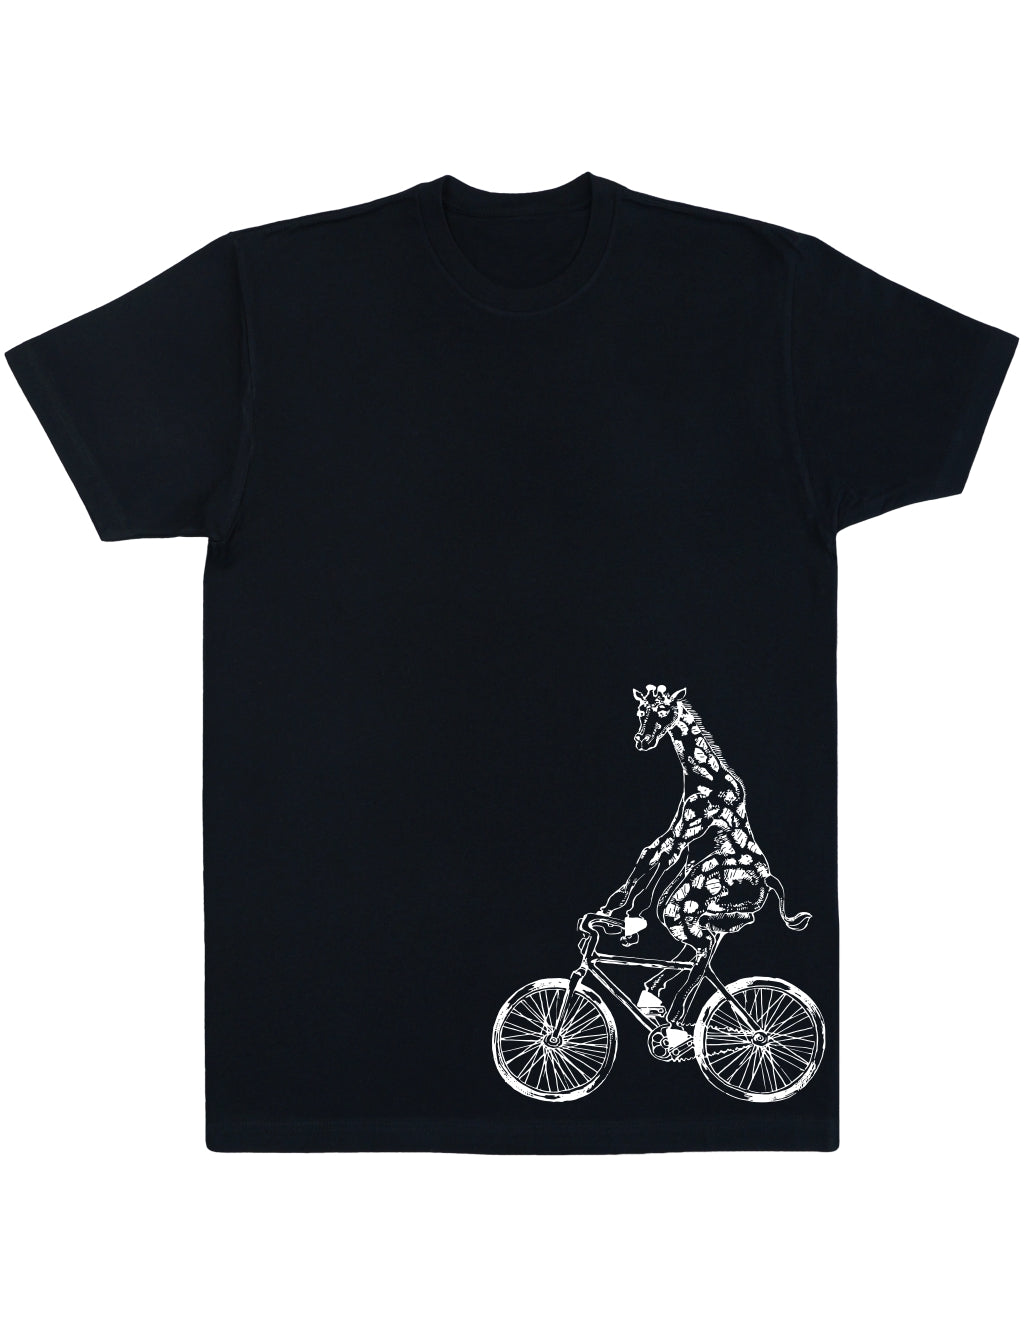 t-shirt-of-giraffe-on-a-bicycle-mens-cotton-black-side-print